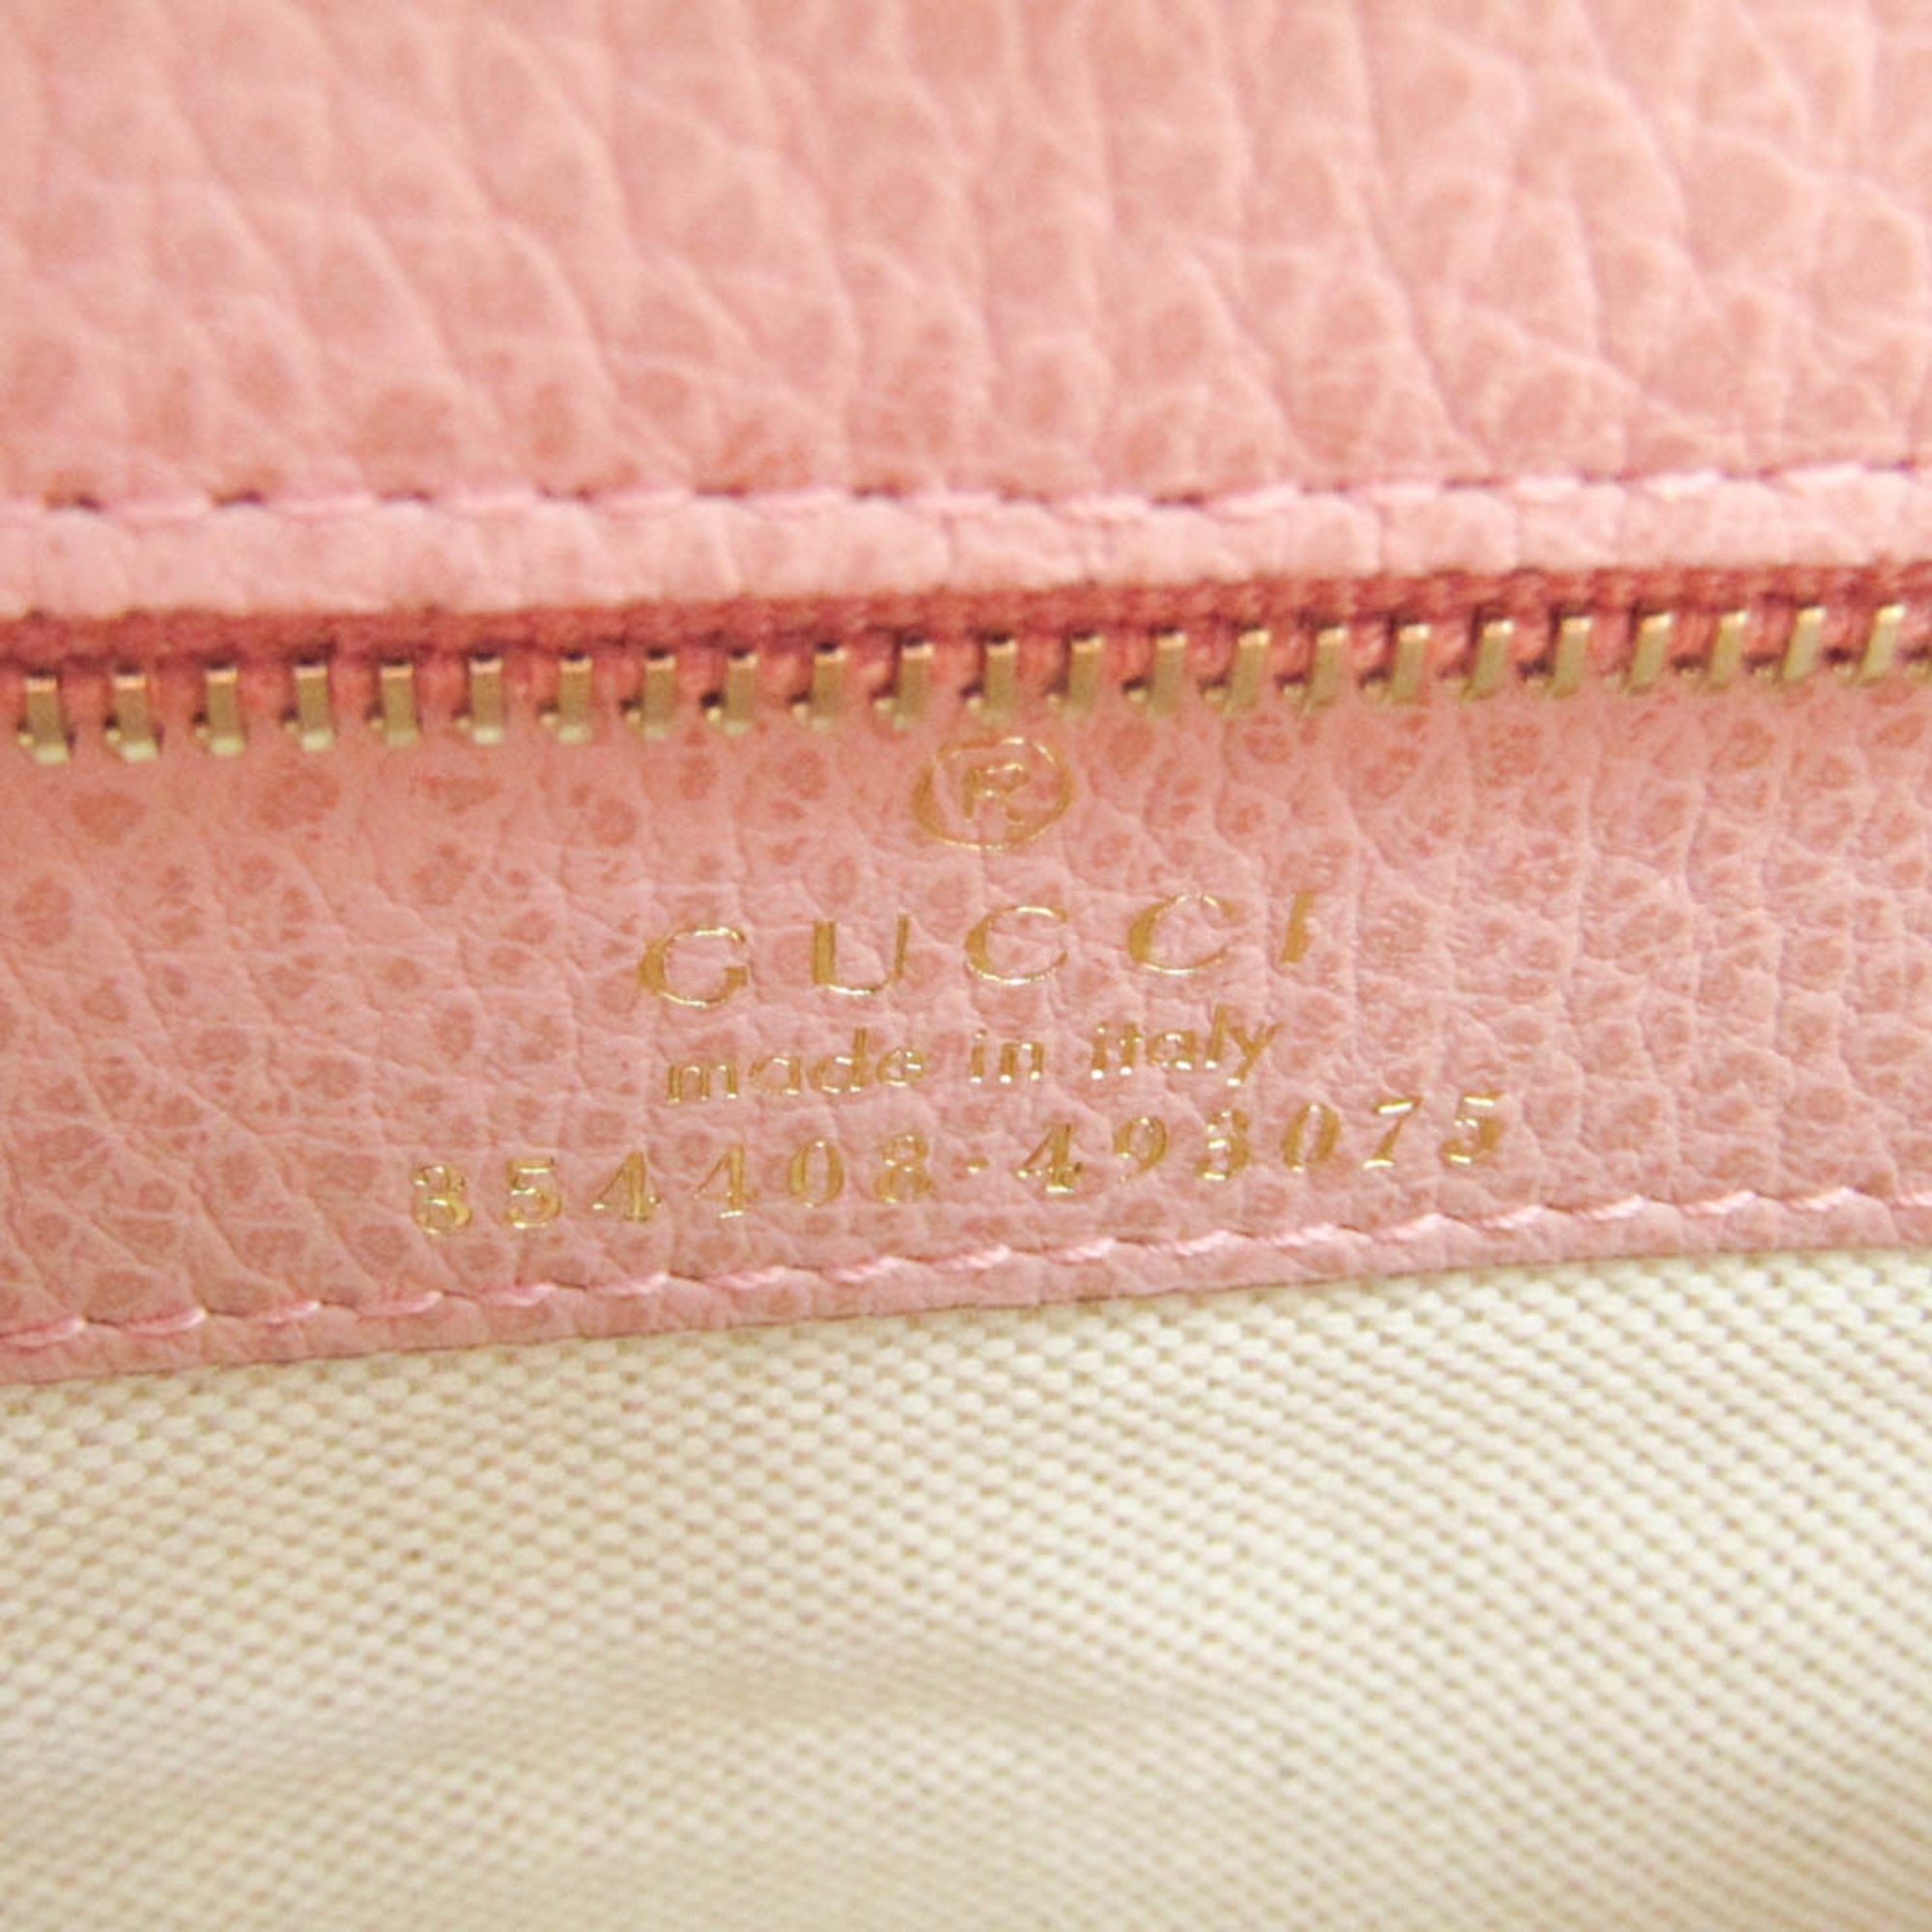 Gucci Gucci Swing 354408 Women's Leather Tote Bag Grayish,Pink